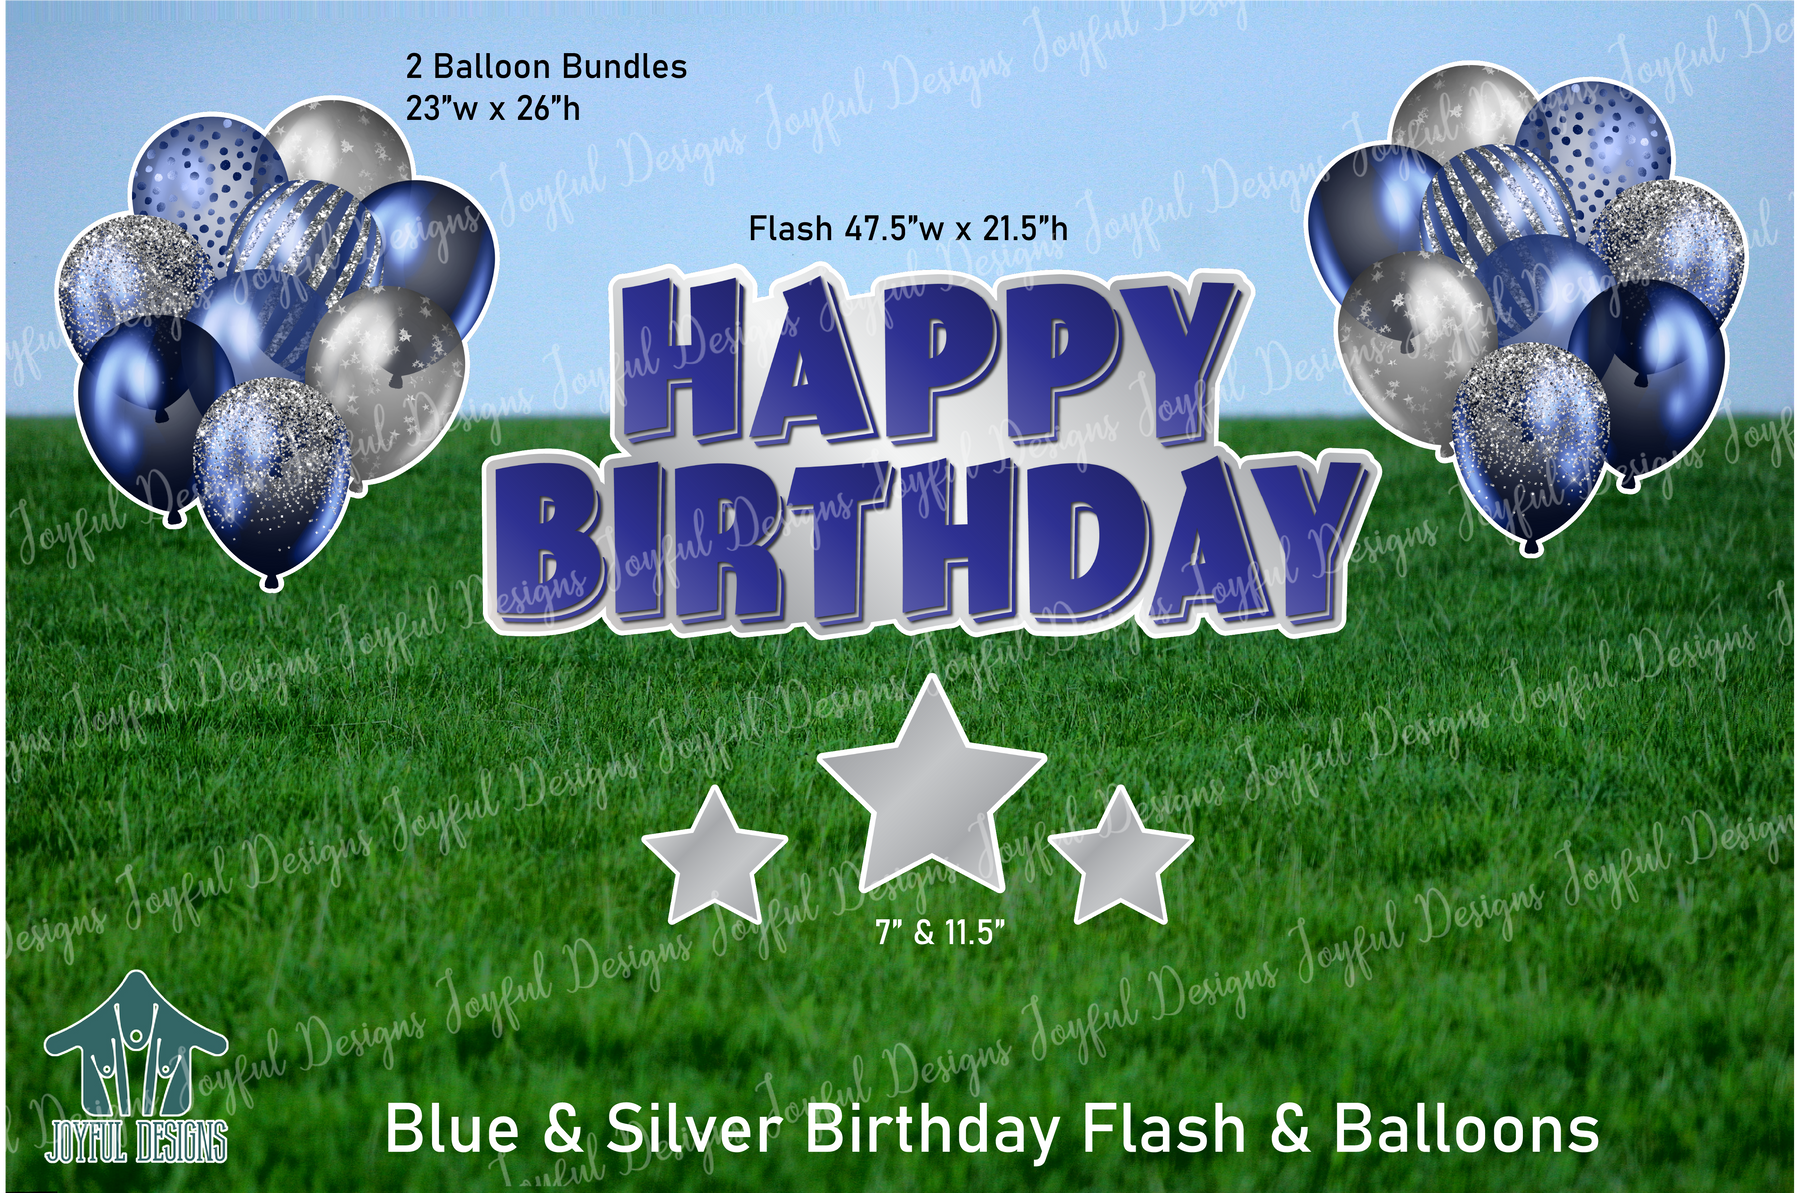 Blue & Silver Birthday Centerpiece & Balloons